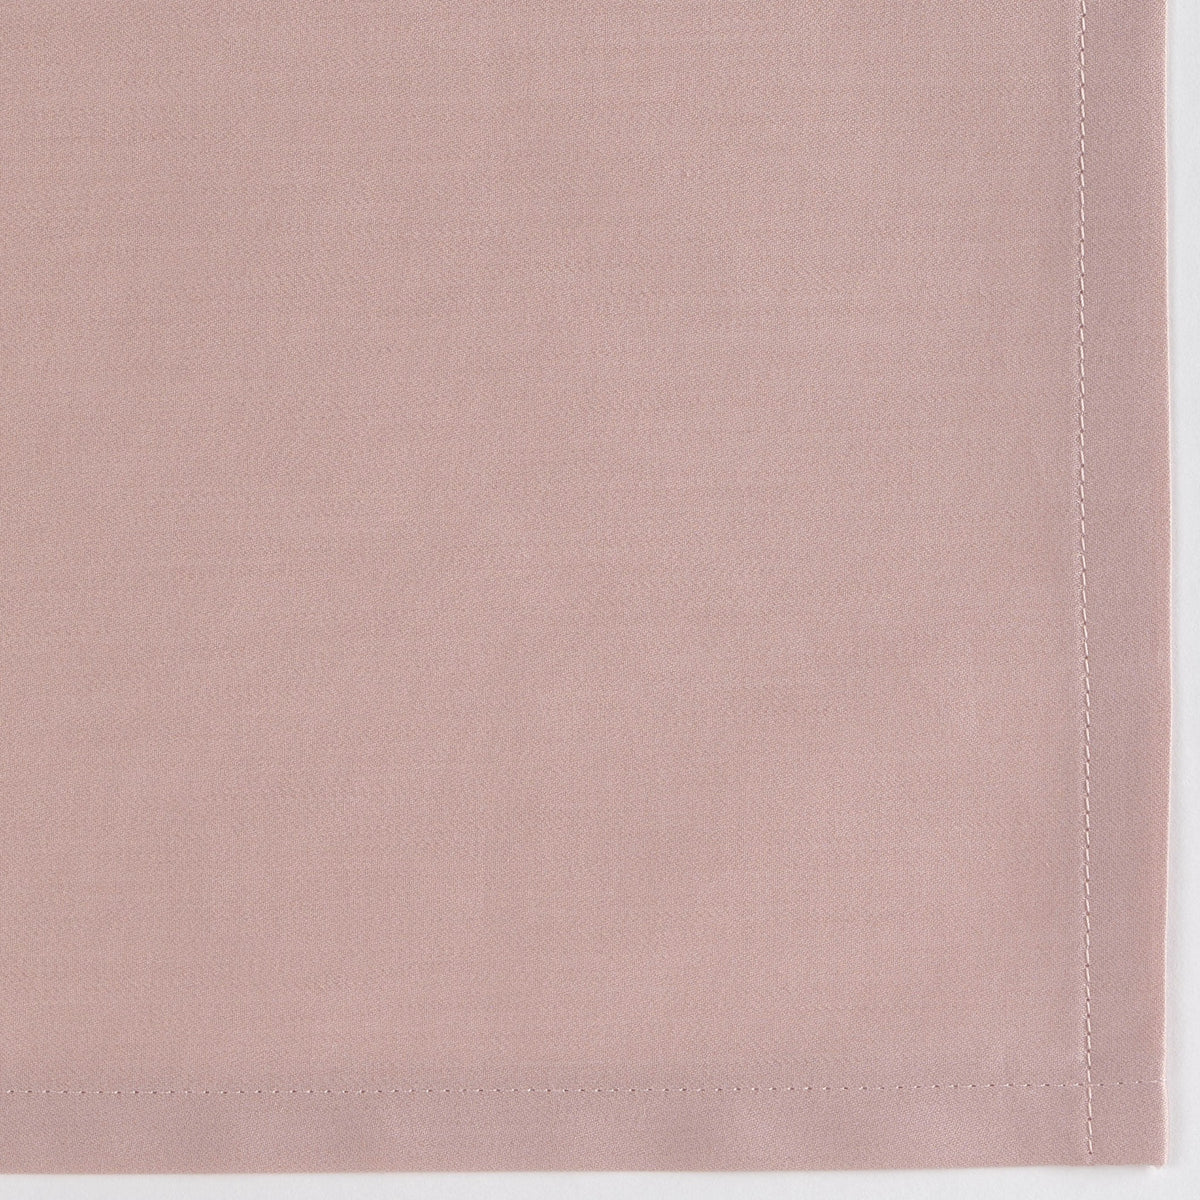 Fabric Closeup of Celso de Lemos Secret Bedding in Nuage Rose Color